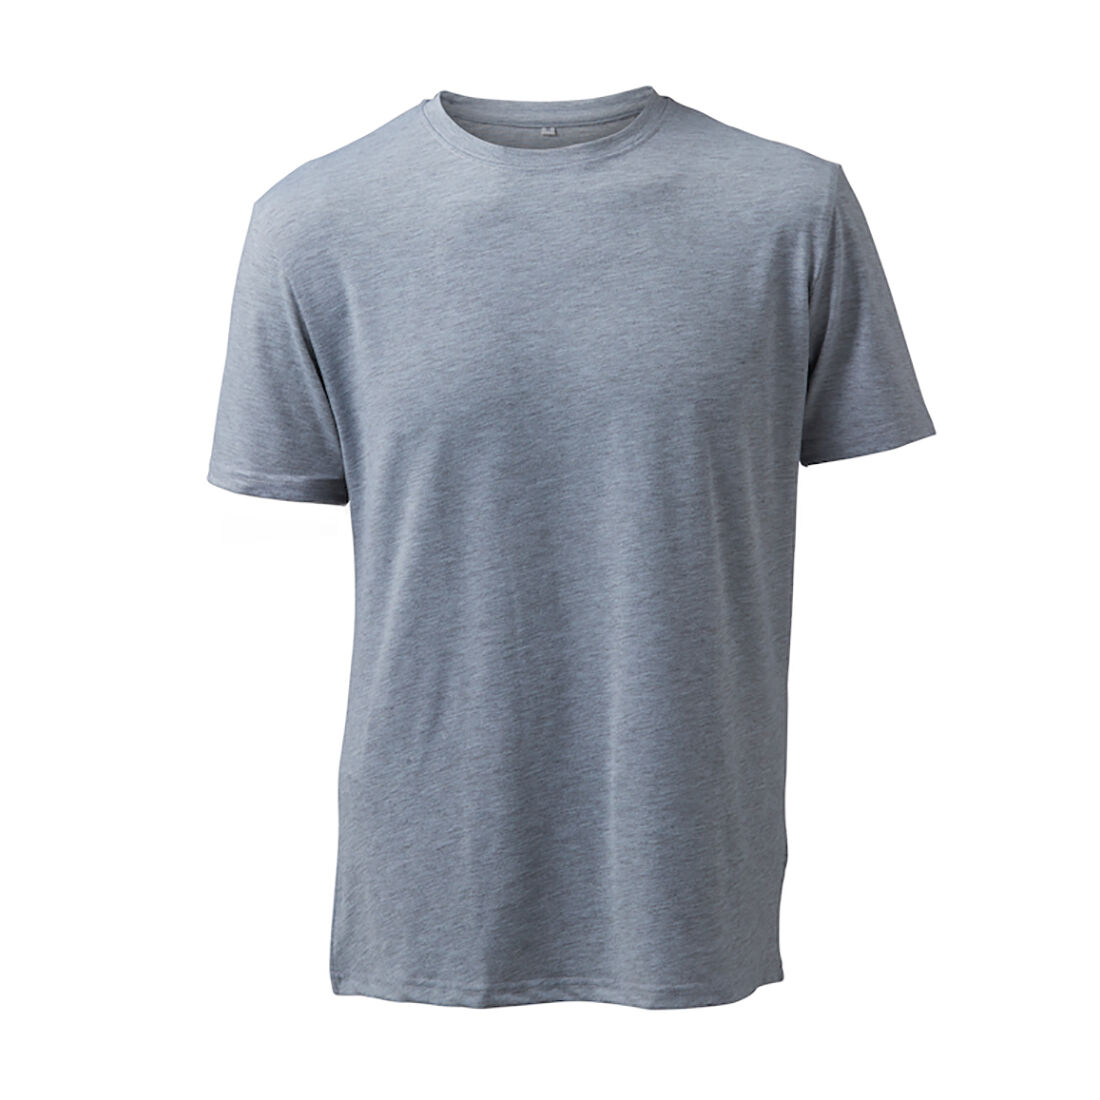 Unisex T Shirt Blank, Crew Neck   Cricut Shop